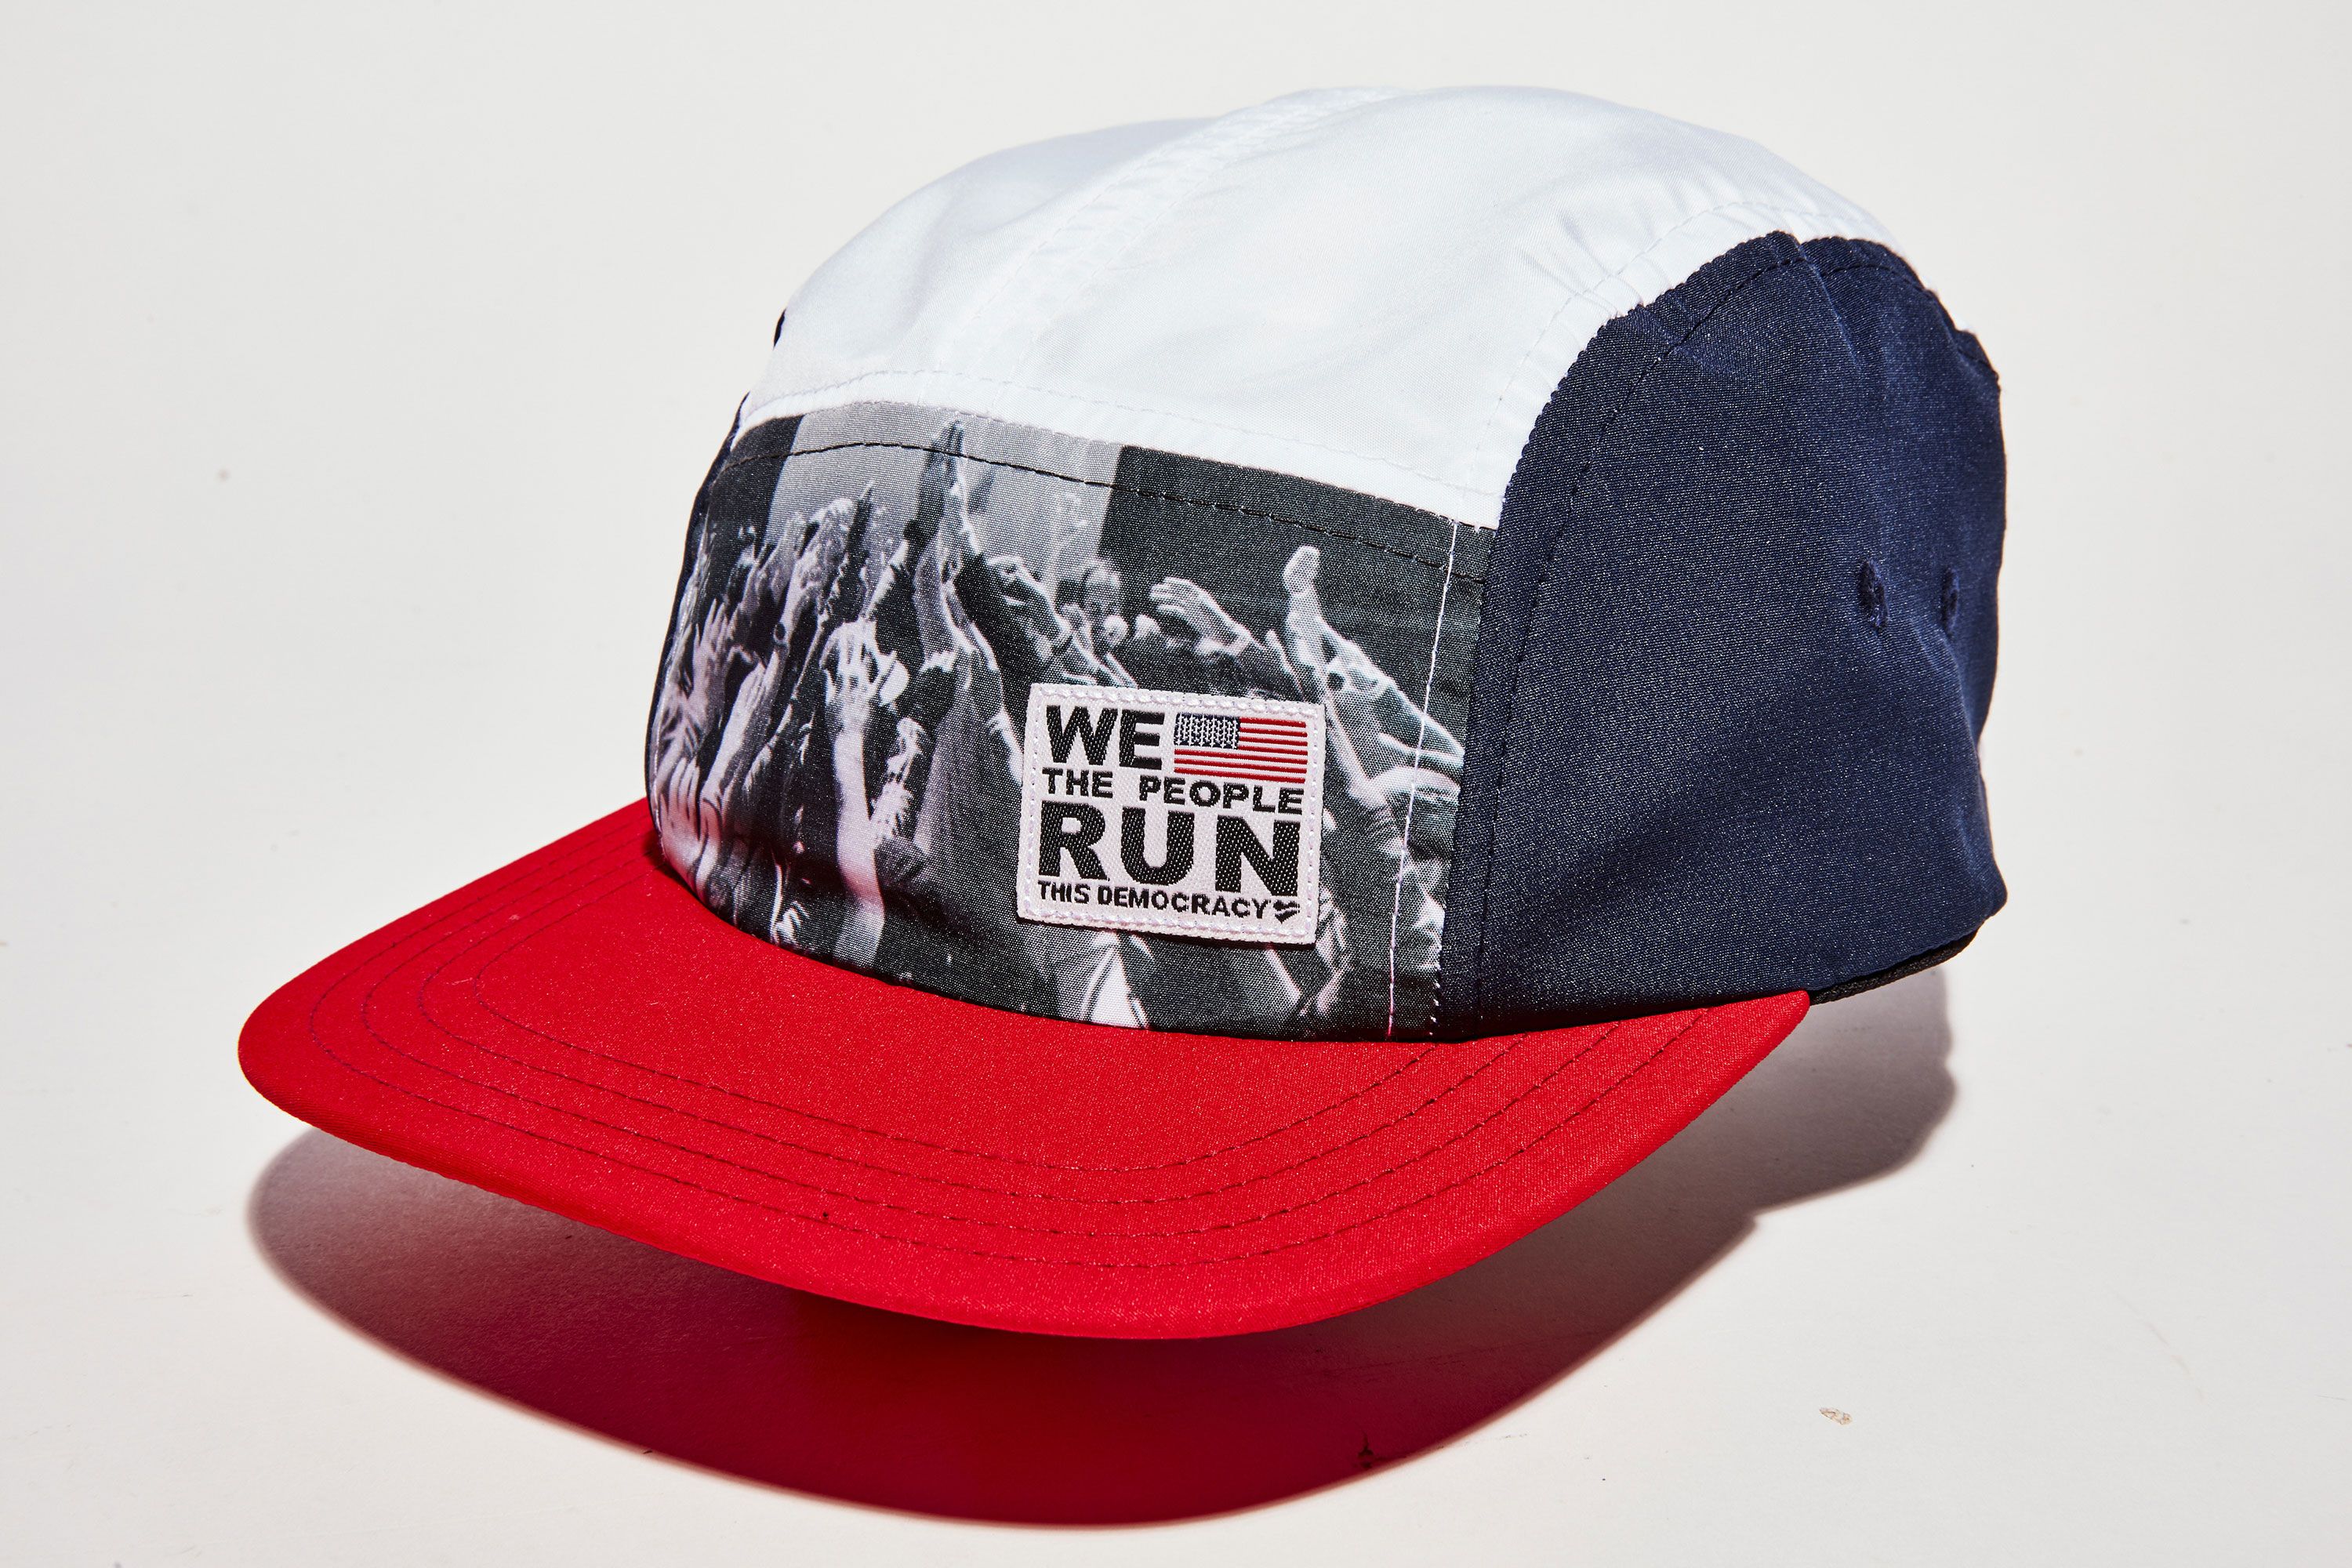 Cap, Clothing, Red, Trucker hat, Baseball cap, Headgear, Design, Fashion accessory, Material property, Font, 